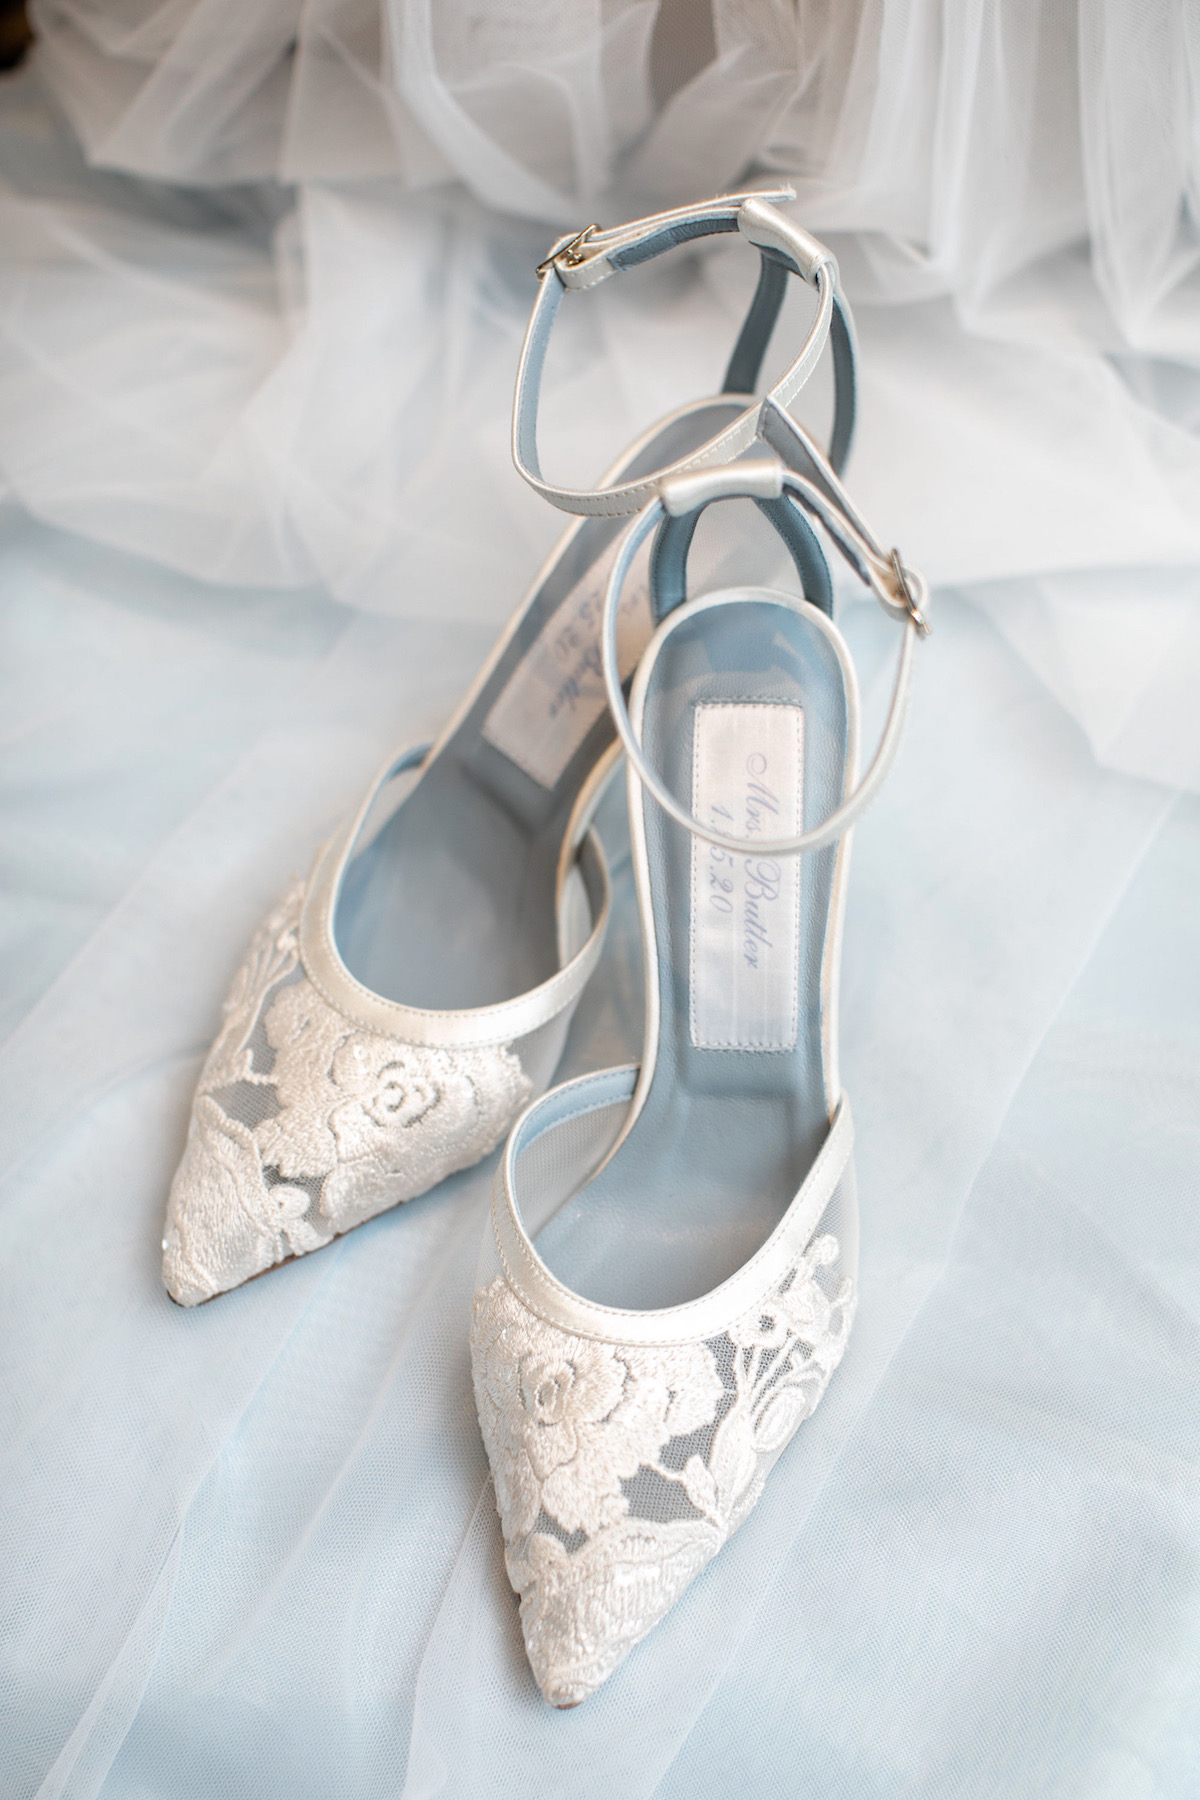 brighton keller wedding shoes dee keller design